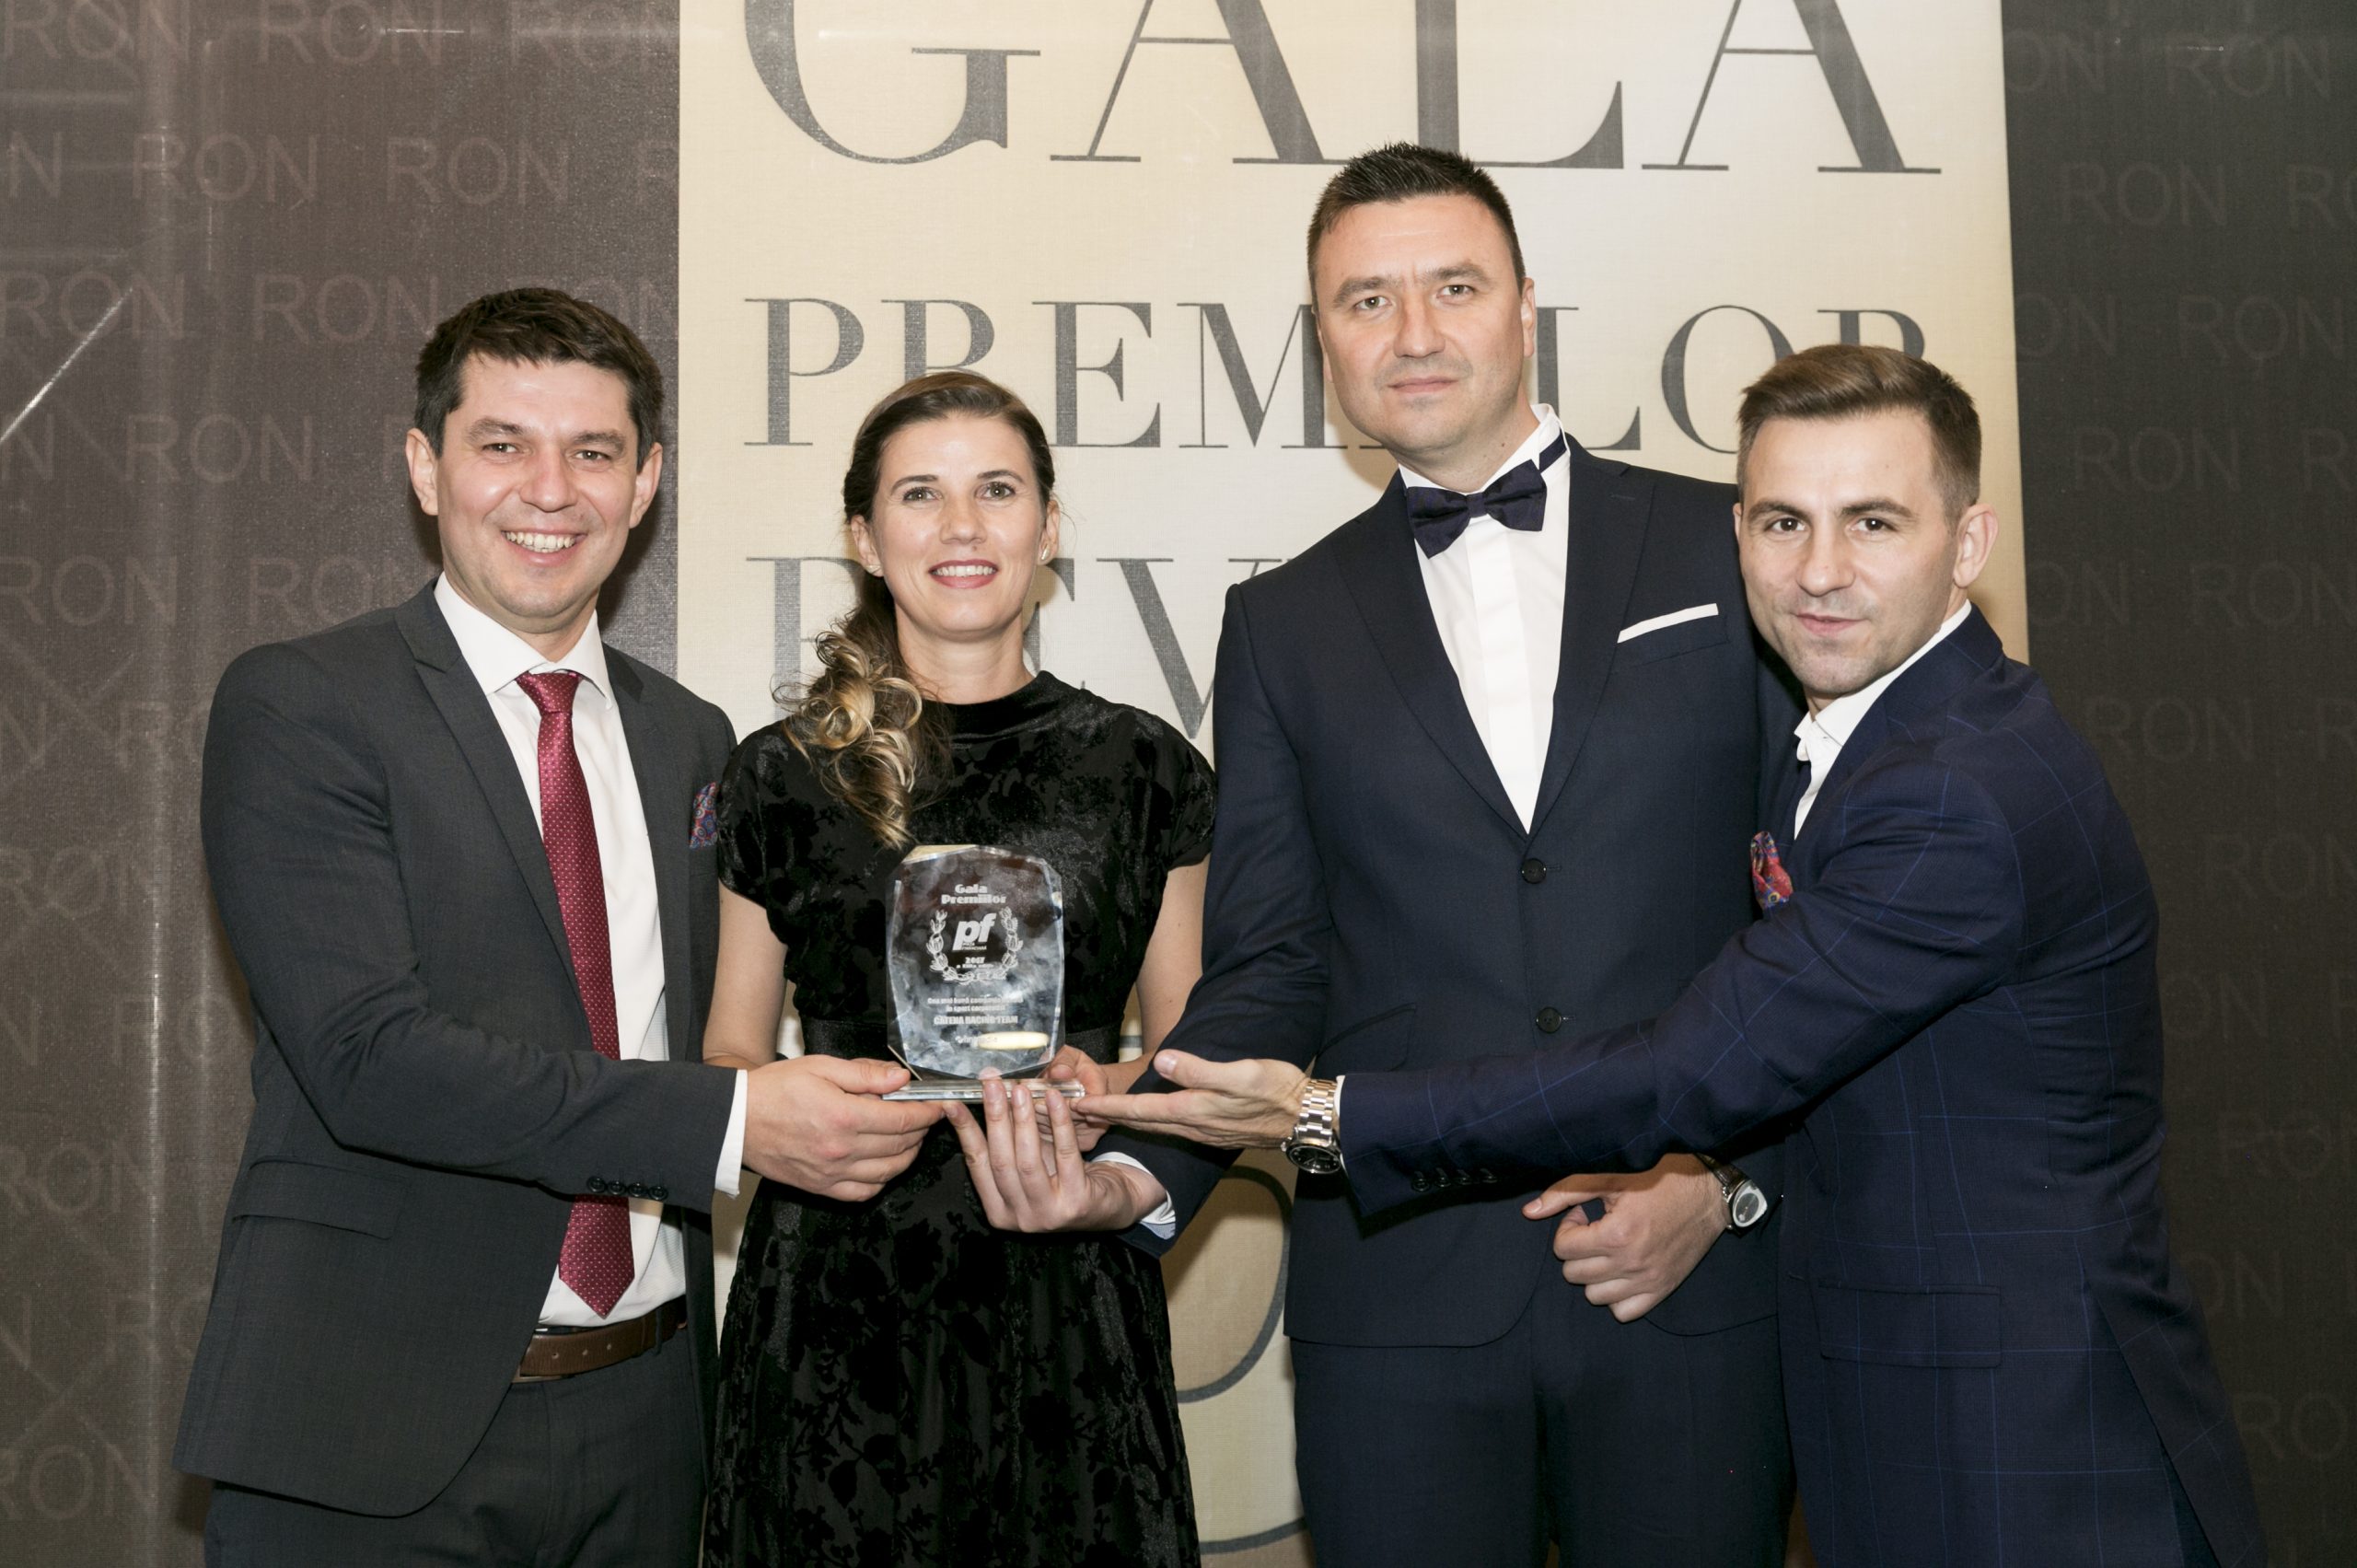 Catena Racing Team, premiata la Gala revistei Piata Financiara